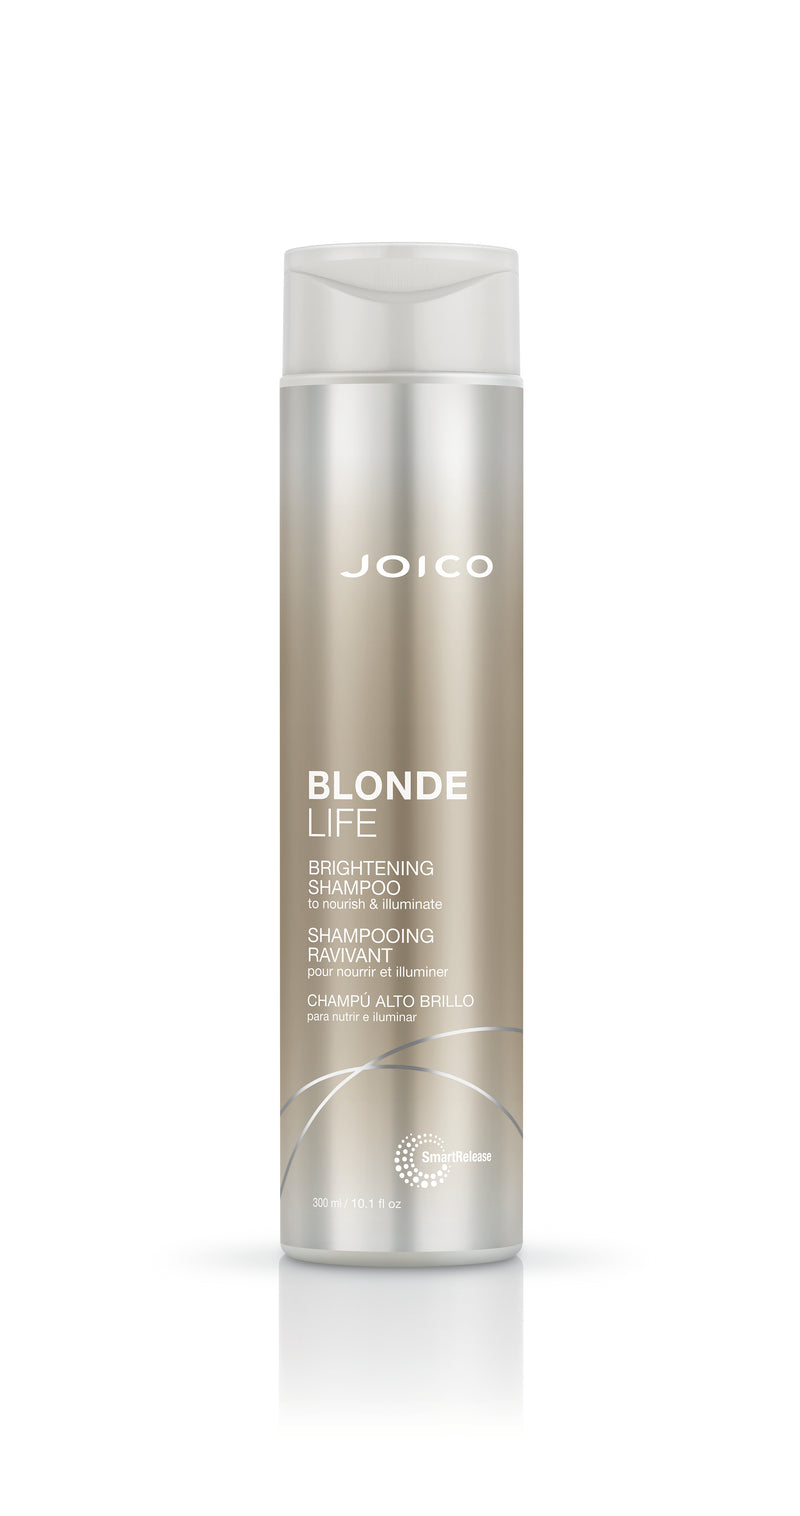 Joico BLONDE LIFE Brightening Shampoo (300mL)